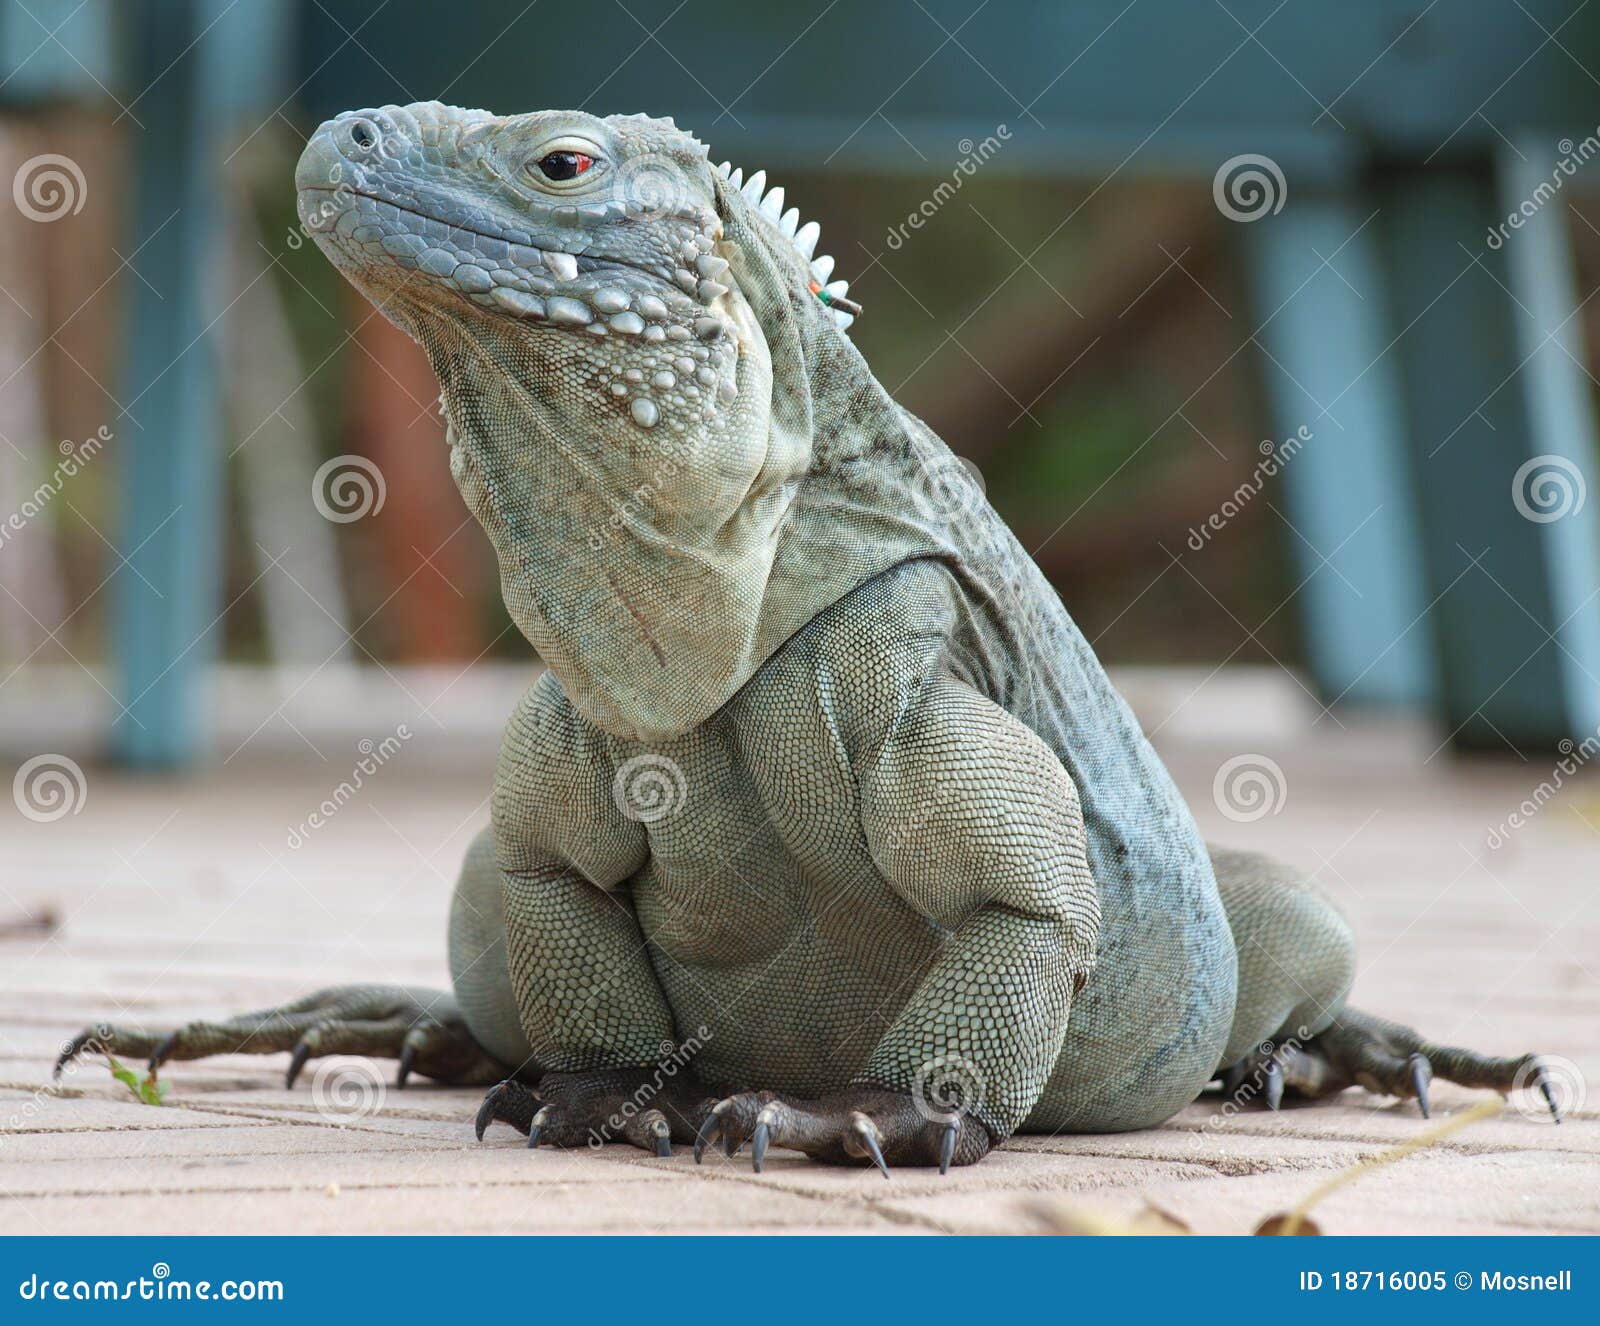 blue iguana cayman islands